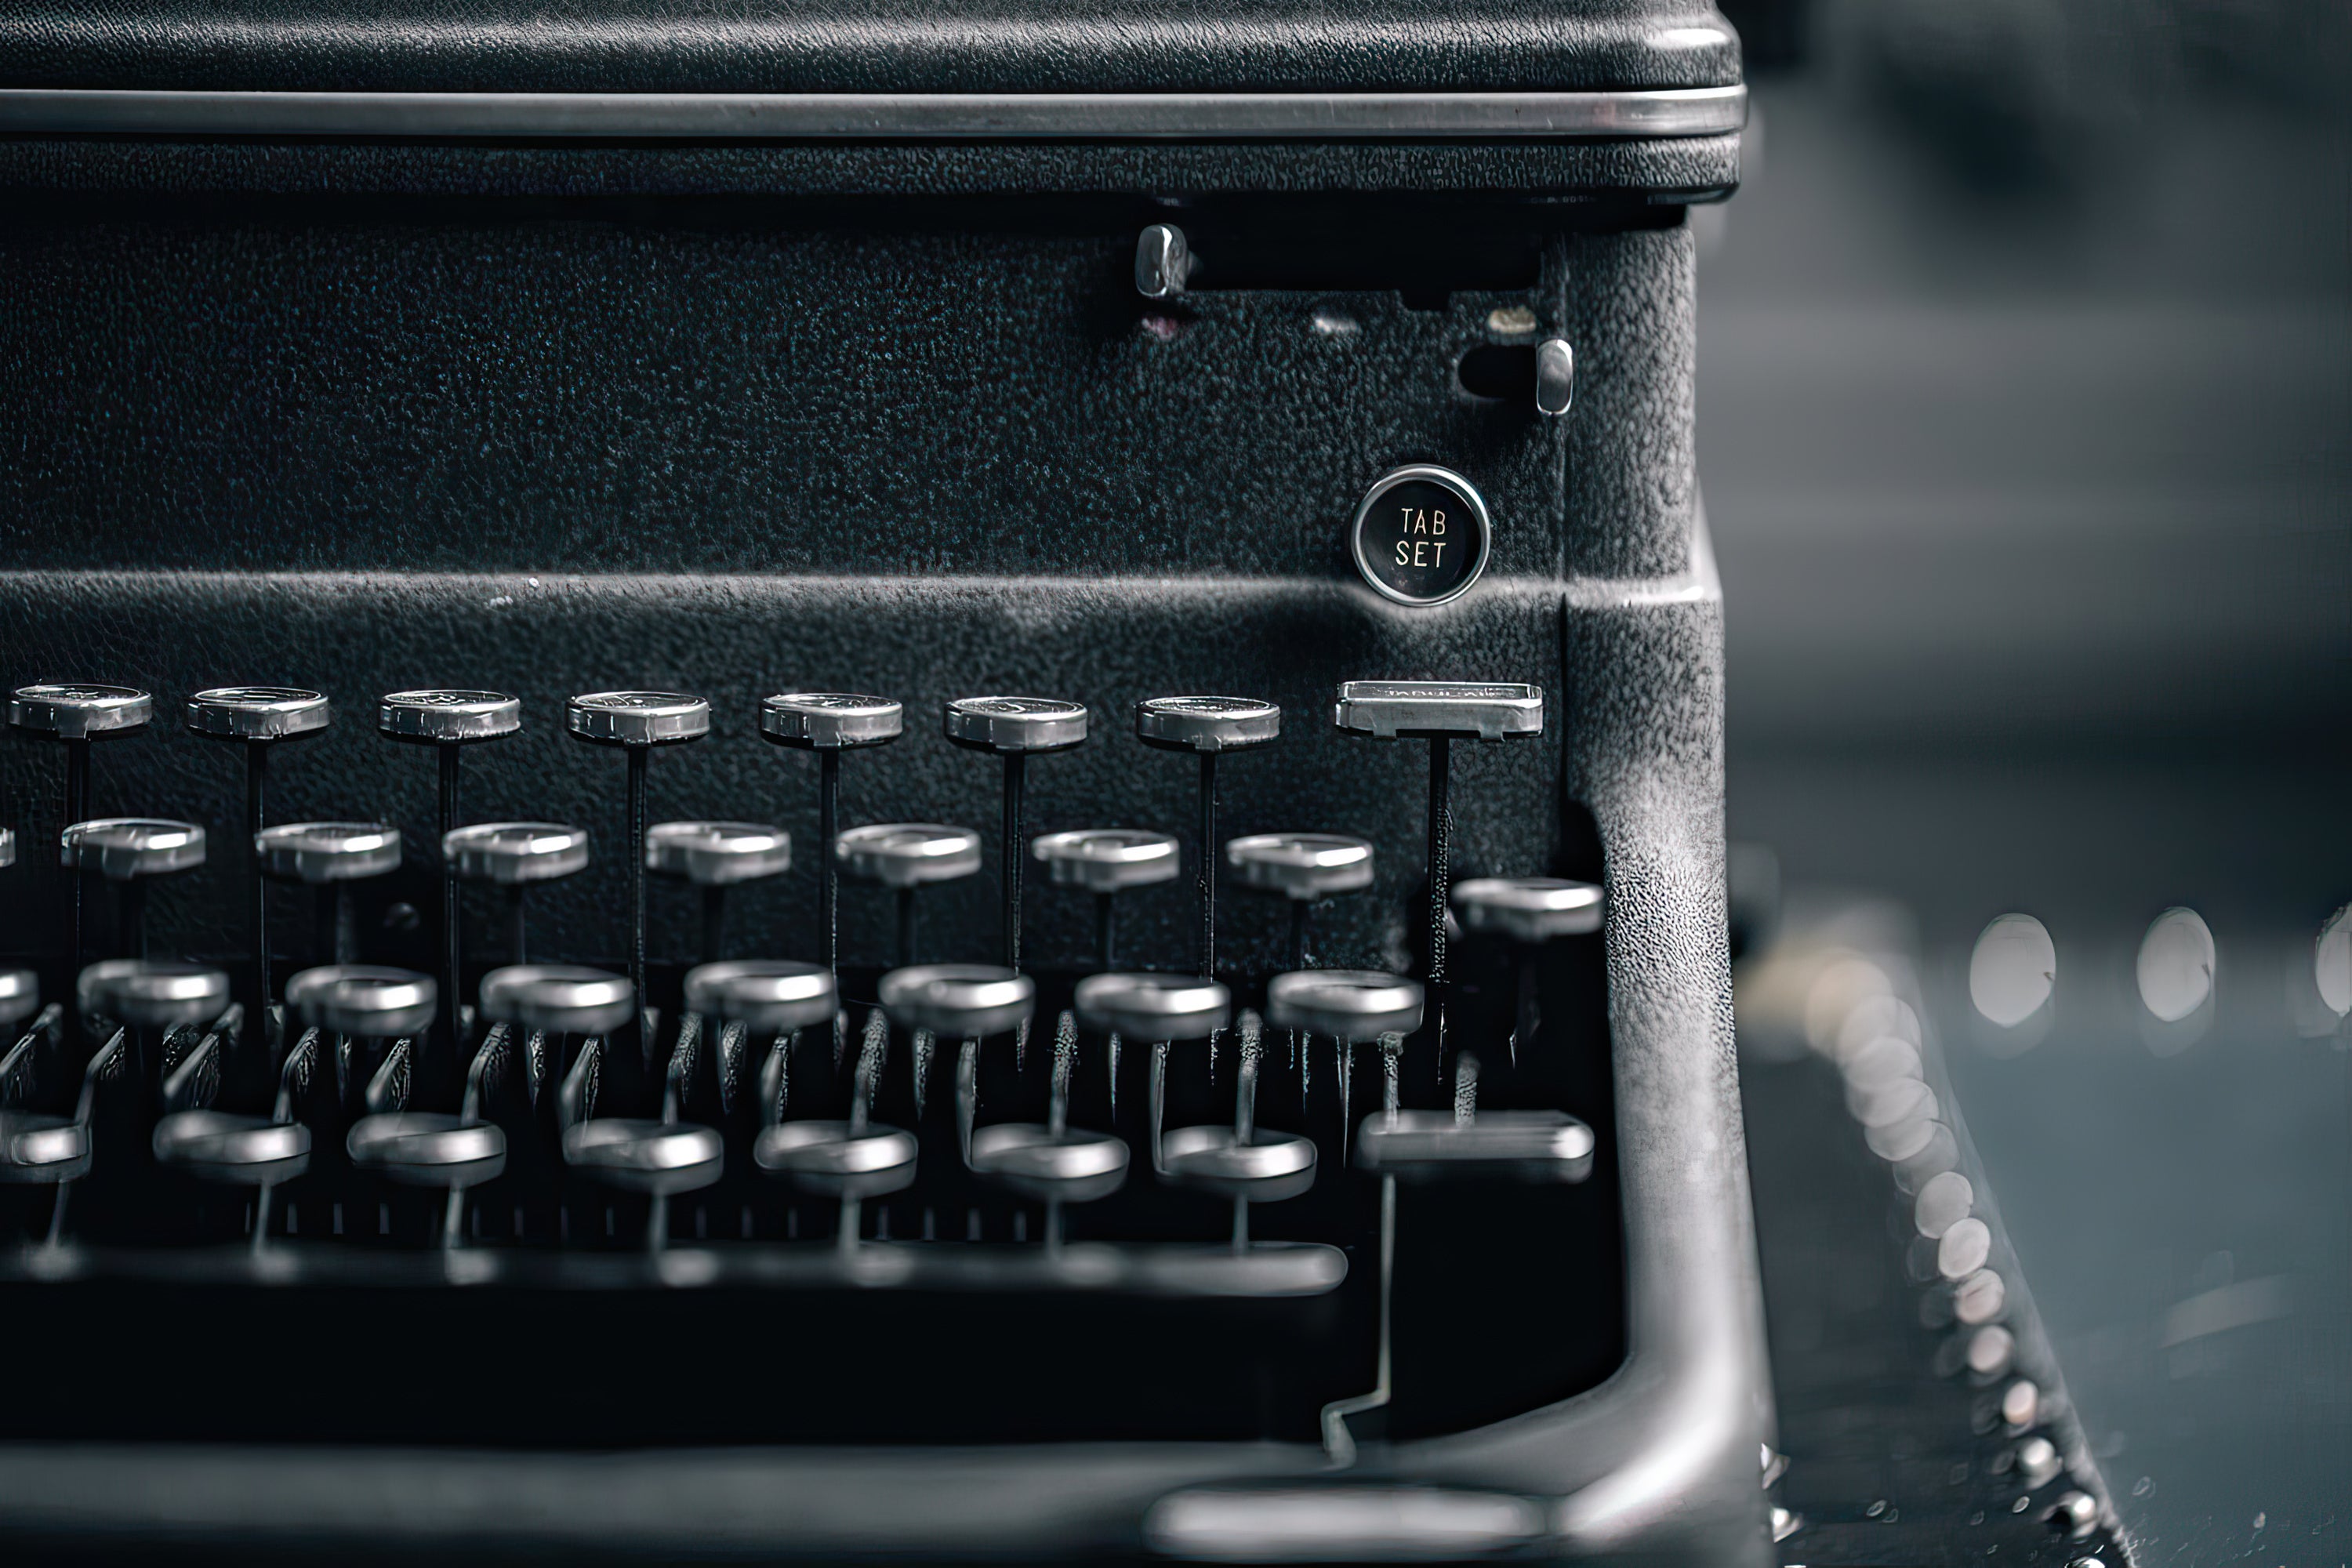 2020 True Story Showcase - Image of vintage typewriter